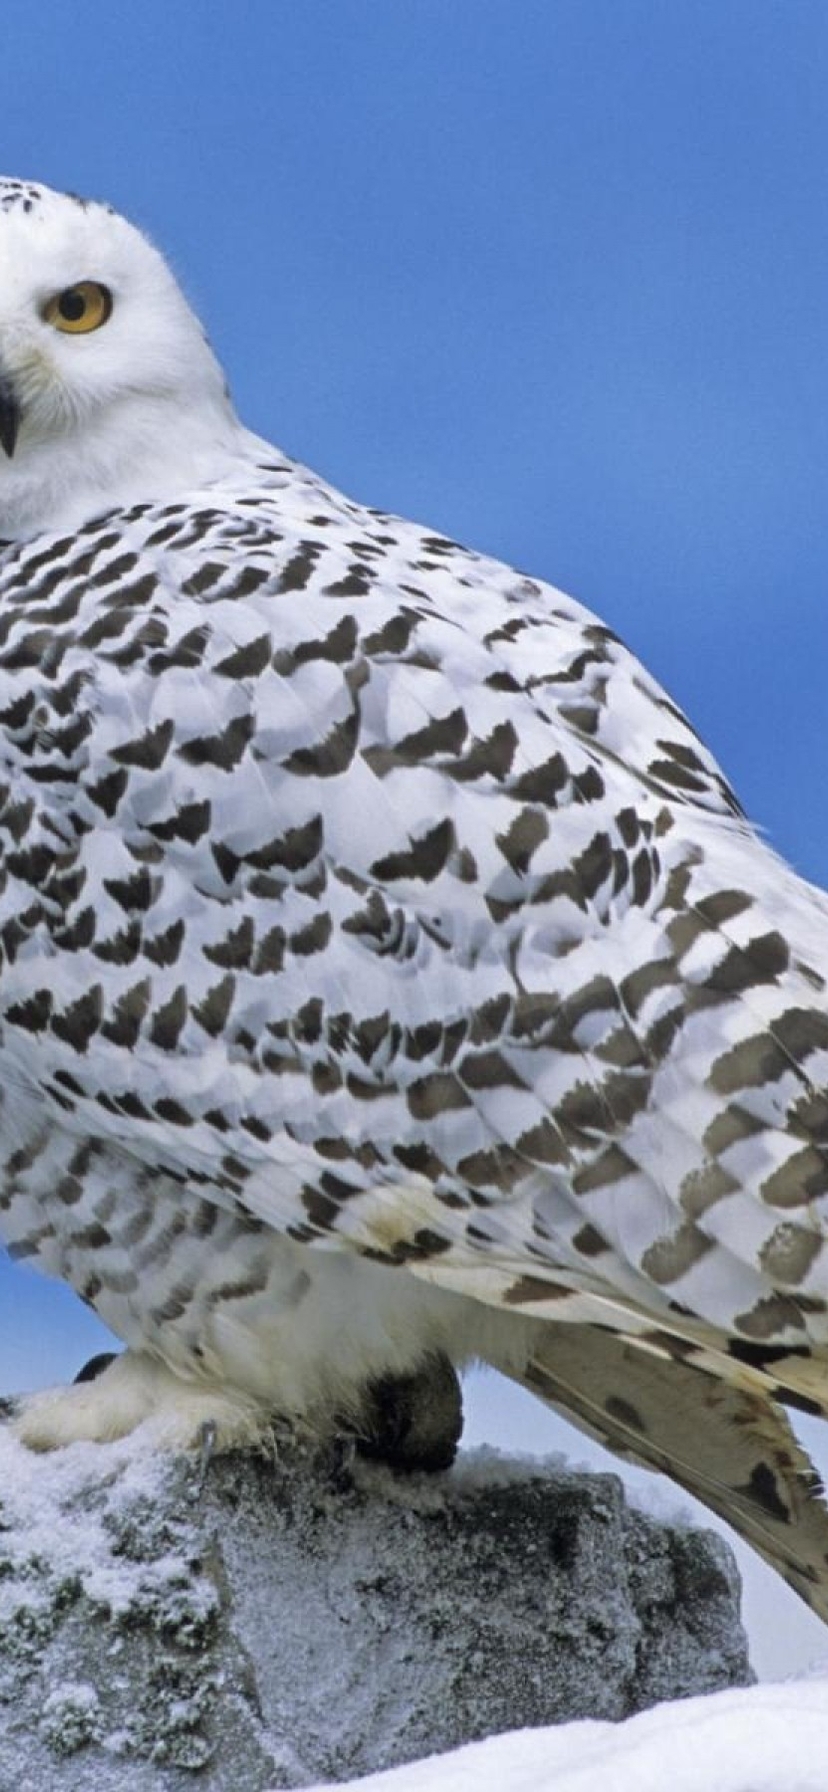 Image: Owl, white, Arctic, plumage, feathers, head, eyes, look, tundra, snow, stone, sky